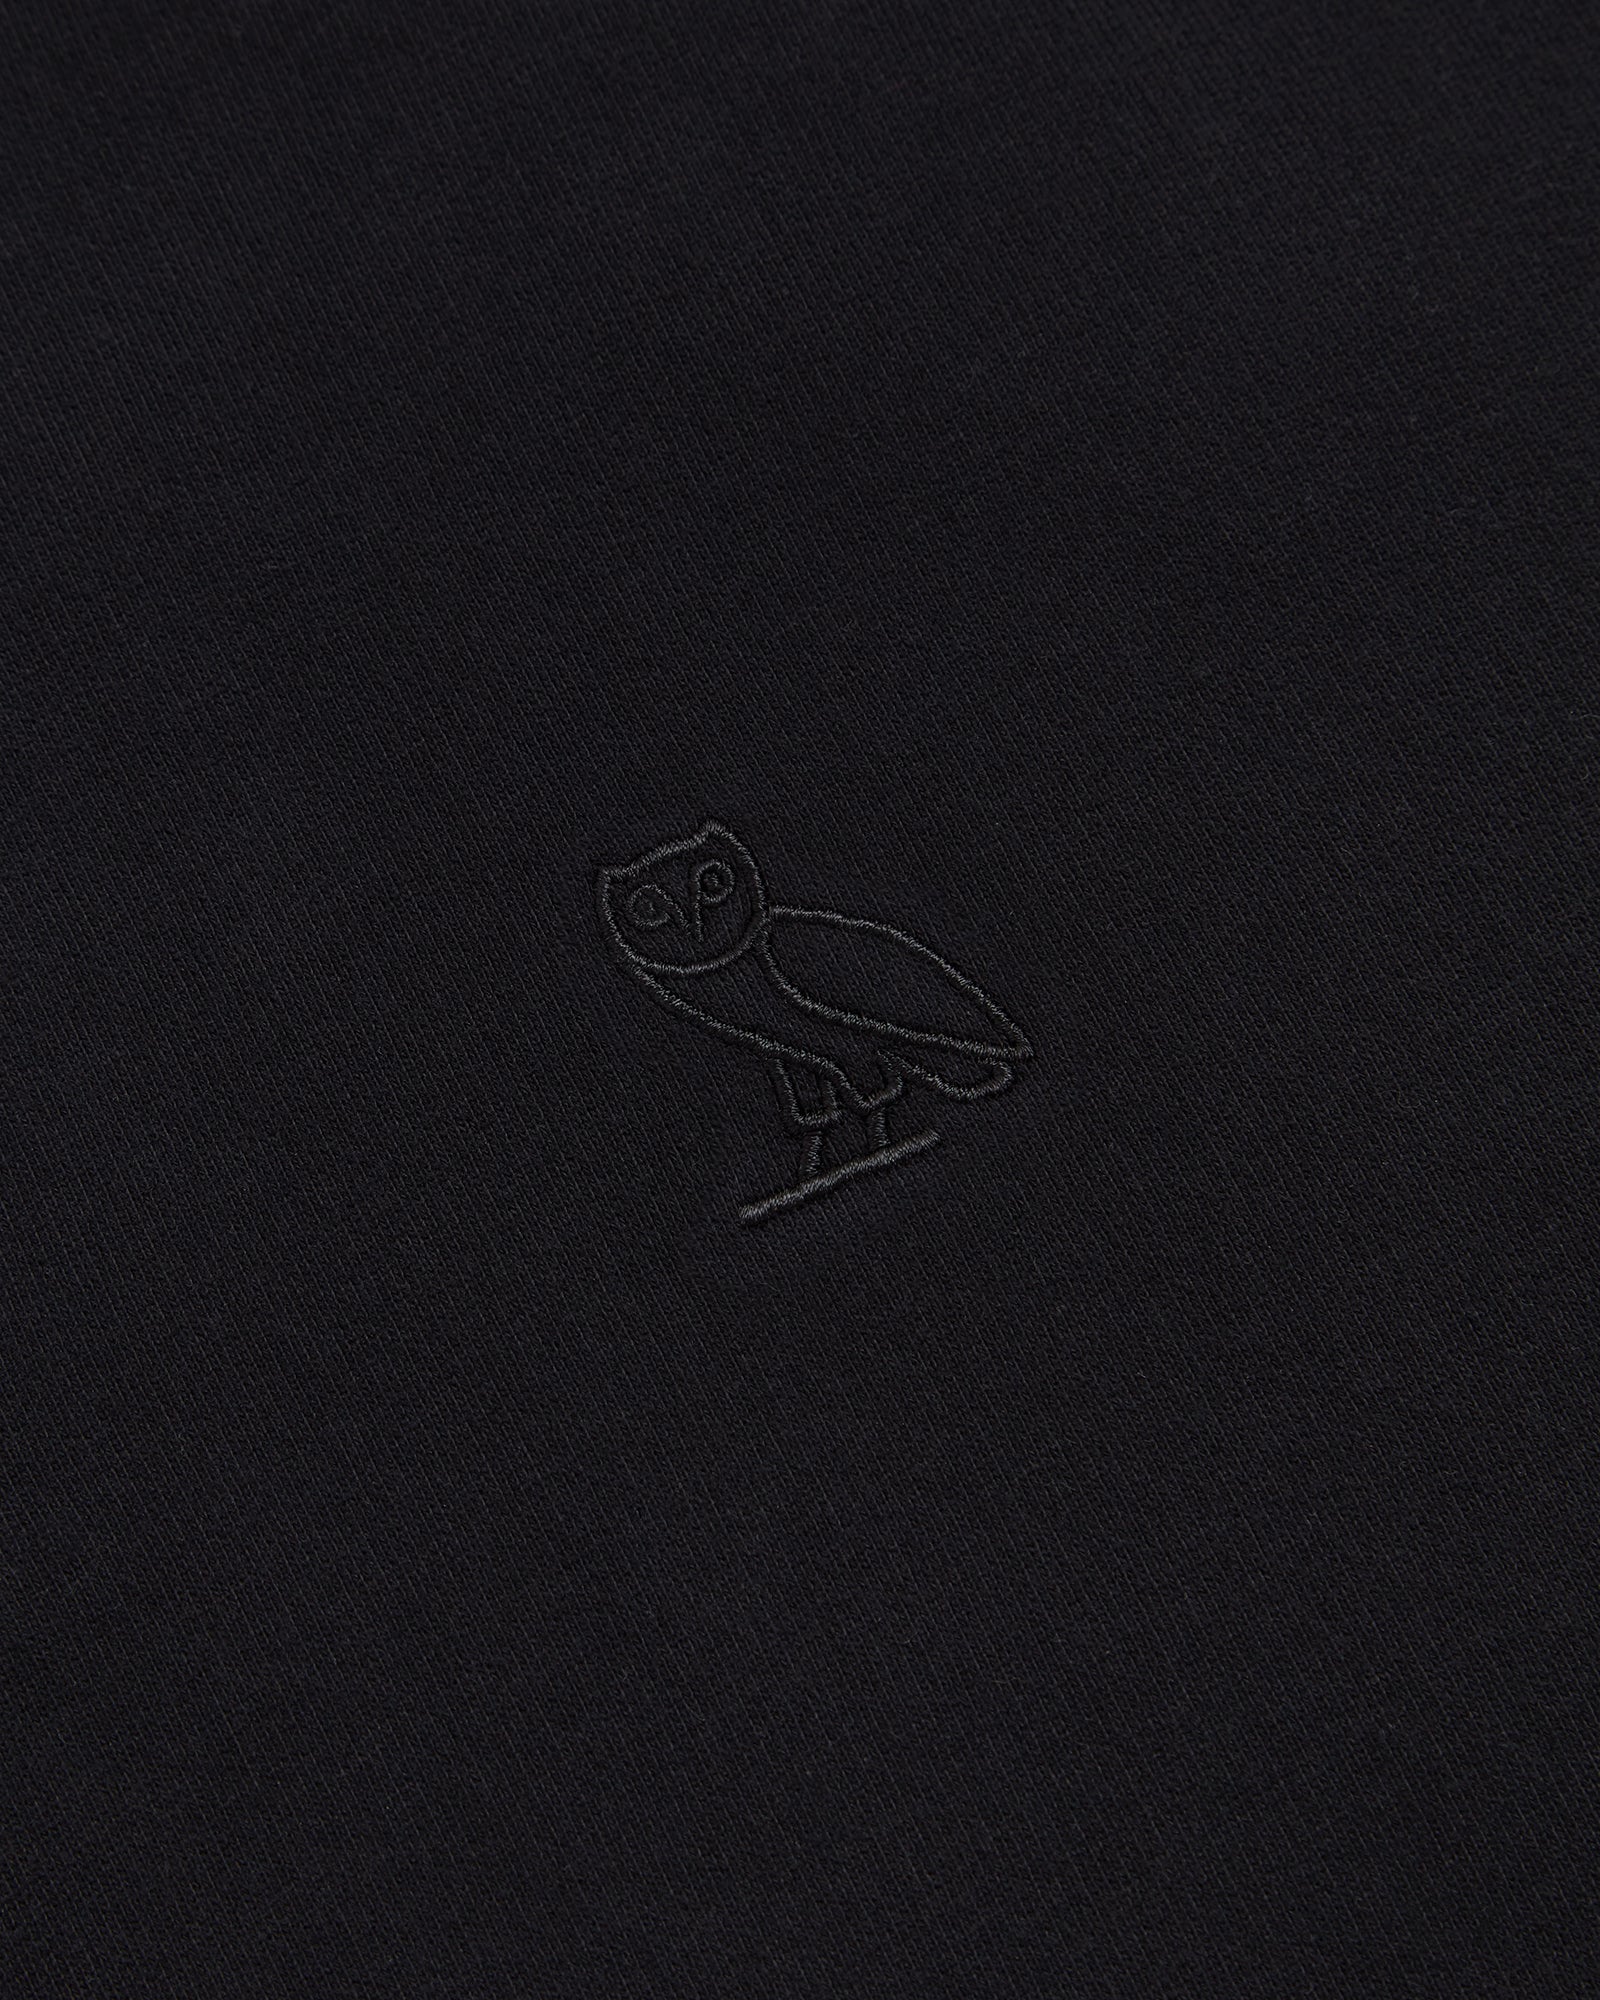 Cropped Quarter Zip Mock Neck Sweater - Black